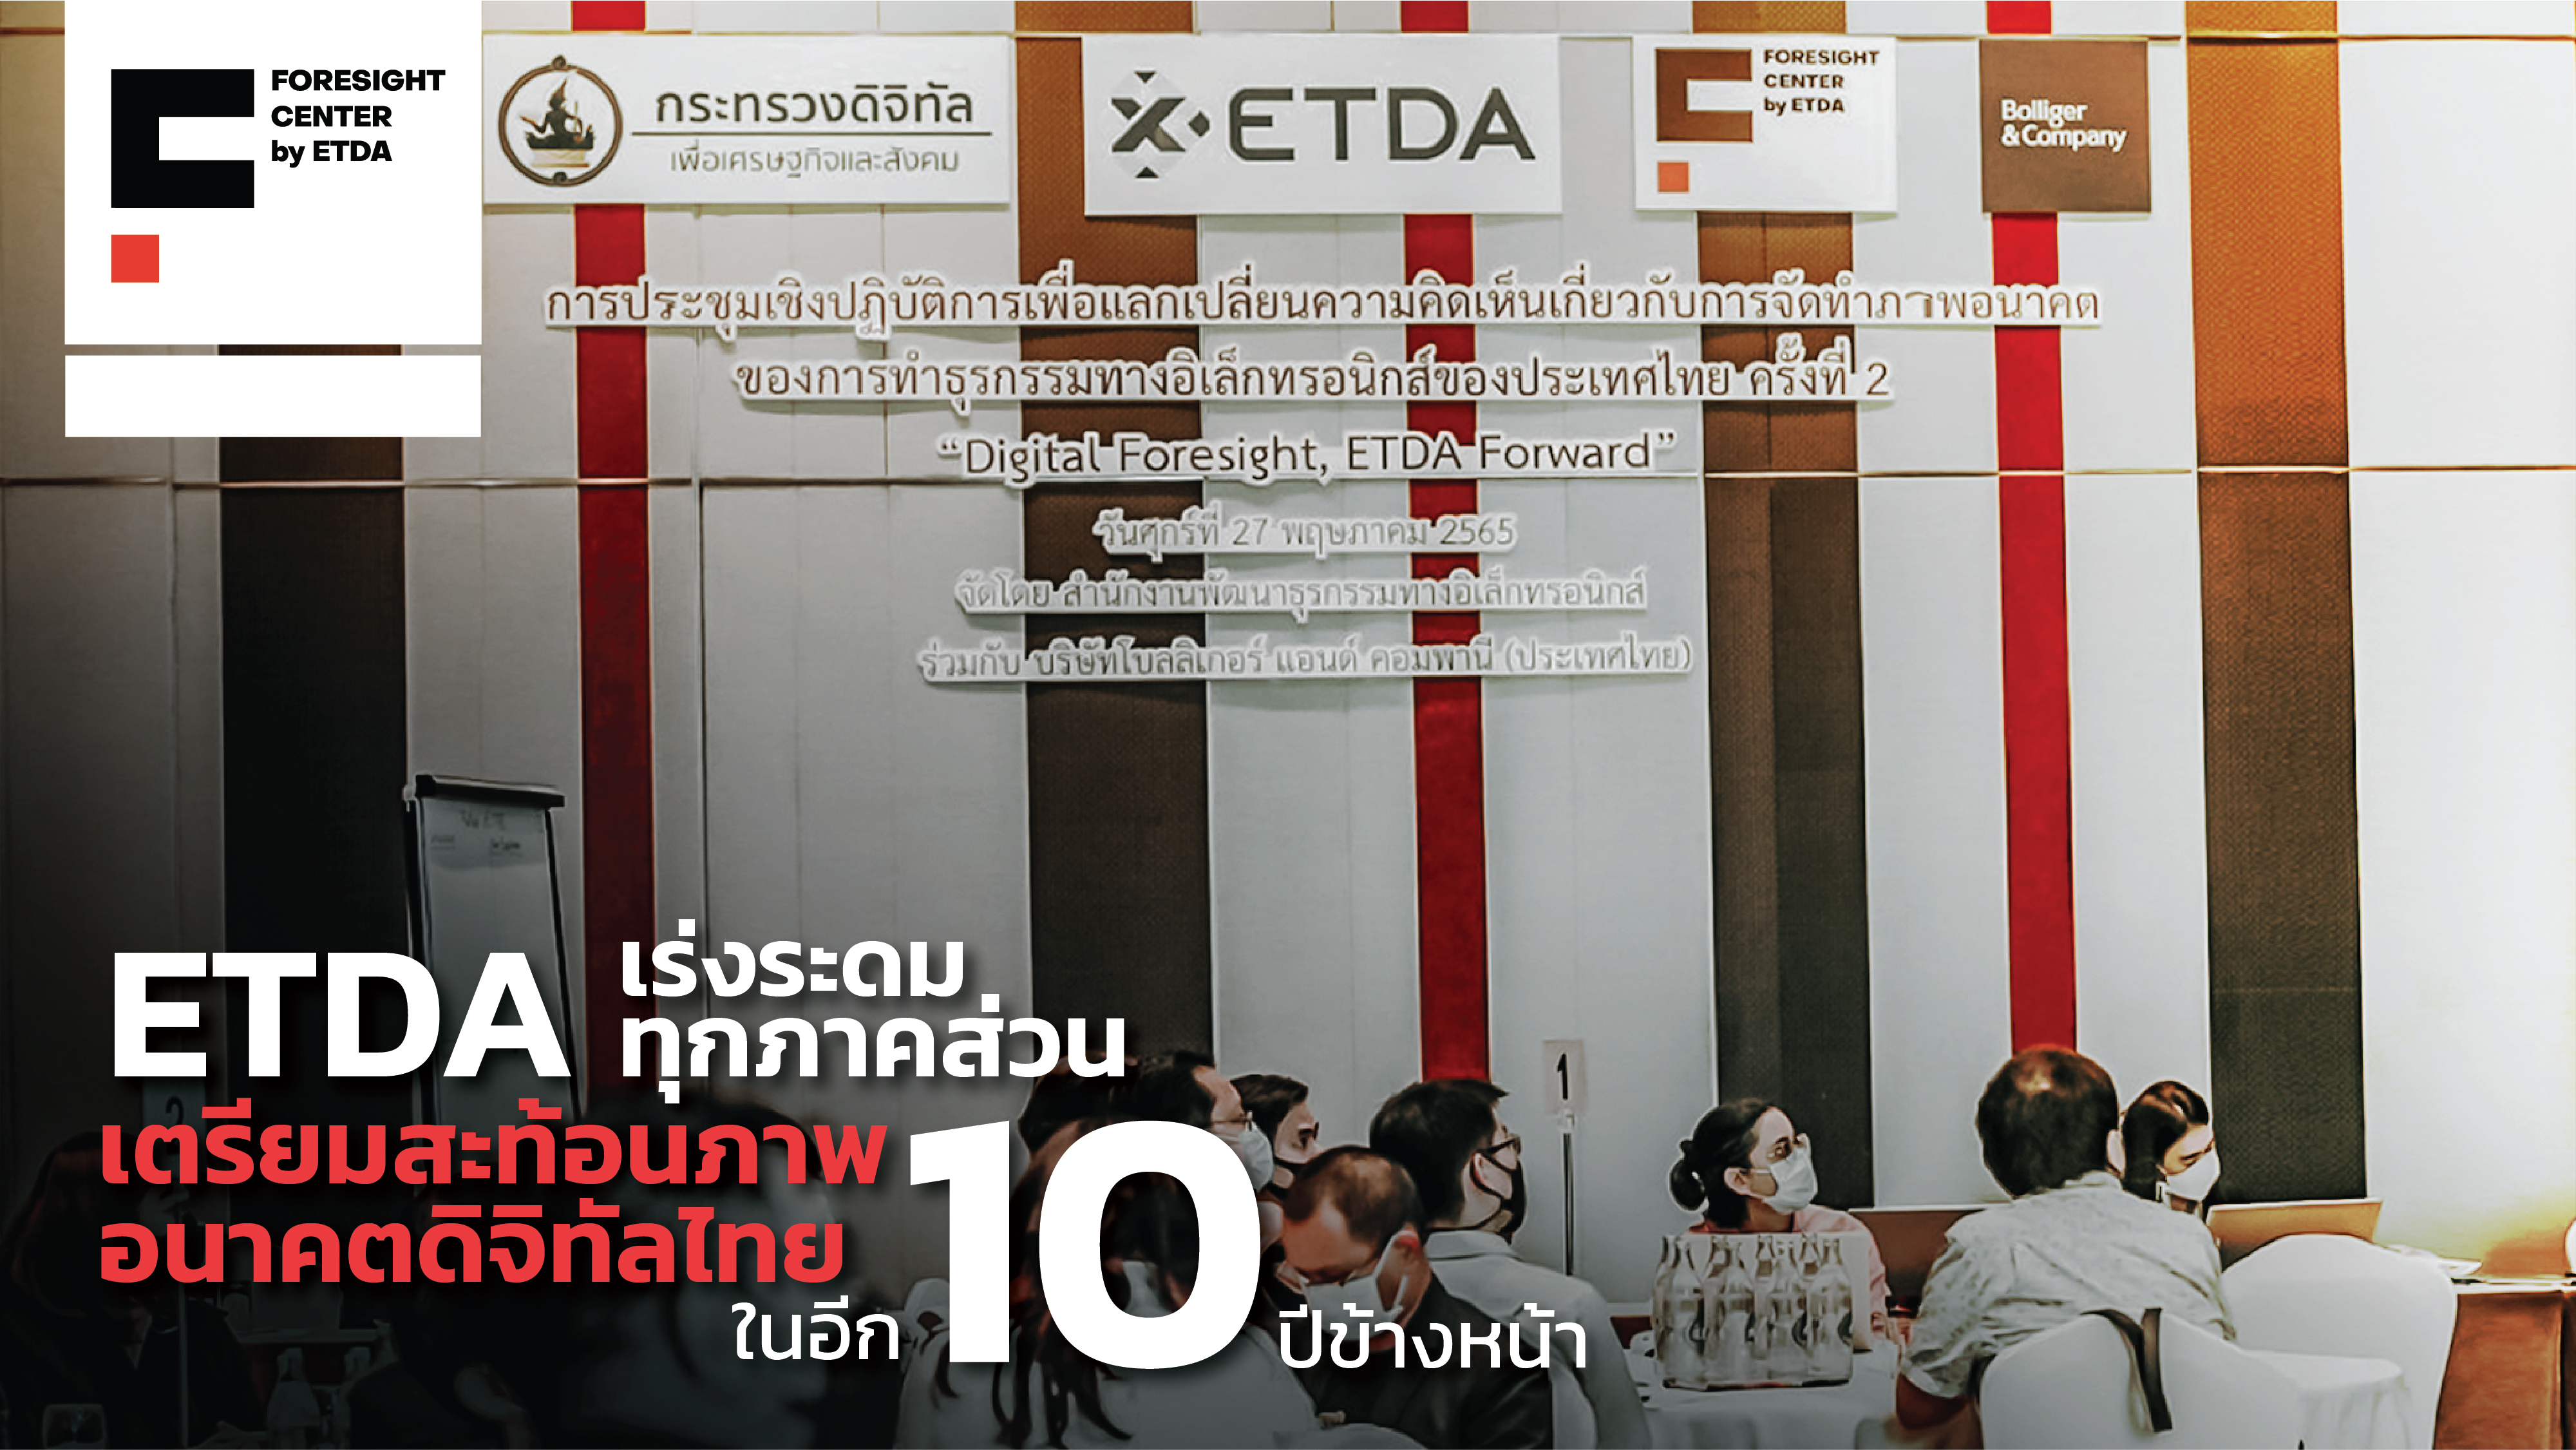 ETDA เร่งระดมทุกภาคส่วน เตรียมสะท้อนภาพอนาคตดิจิทัลไทย ในอีก 10 ปีข้างหน้า